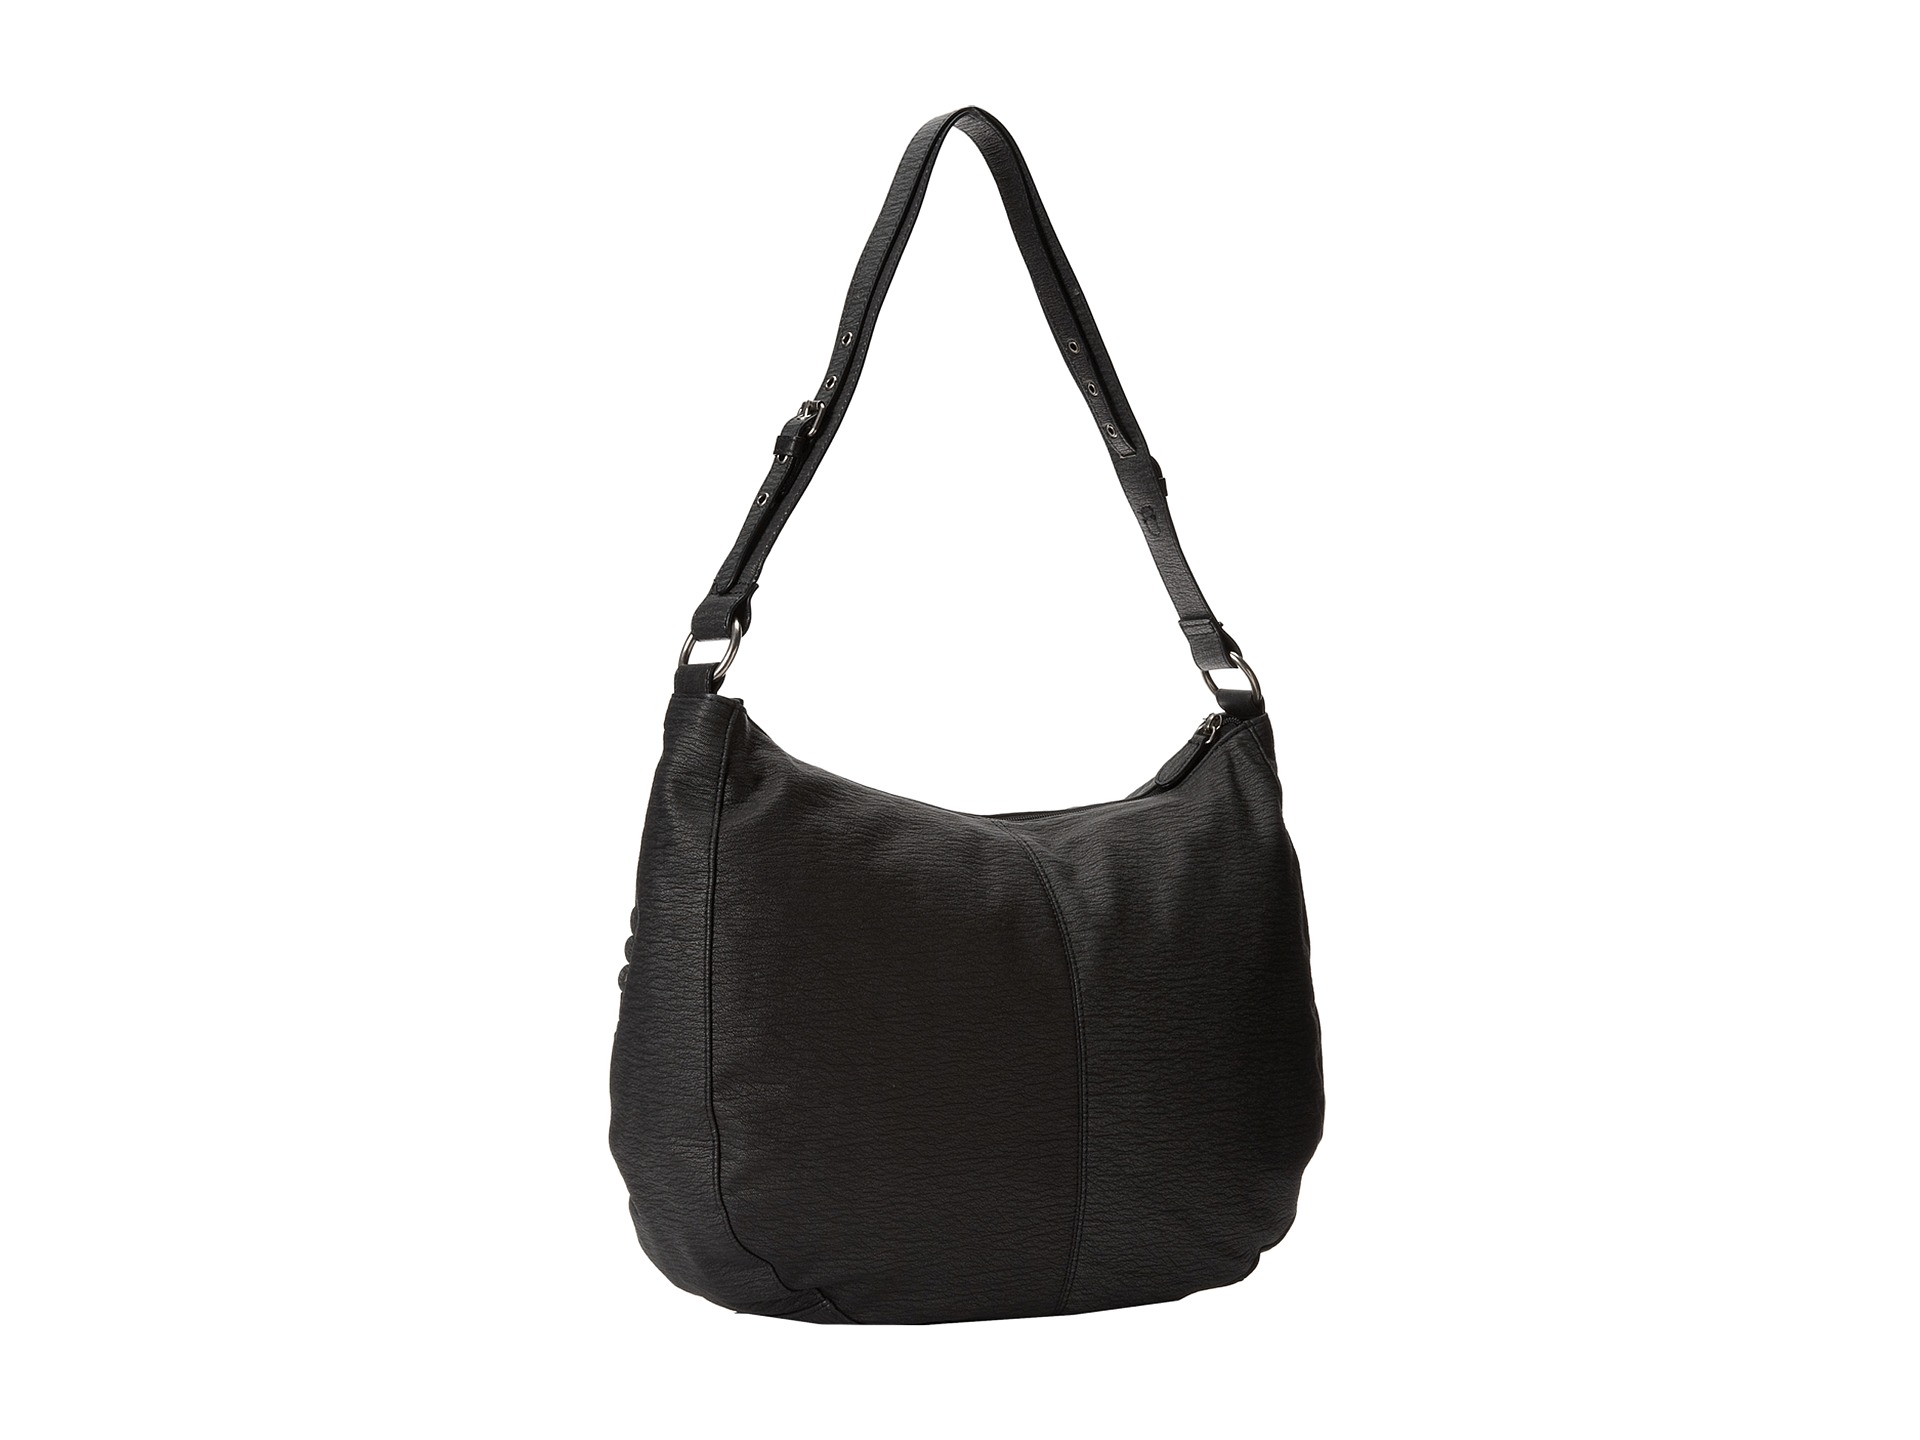 Roxy Ritual Shoulder Bag, Bags | Shipped Free at Zappos